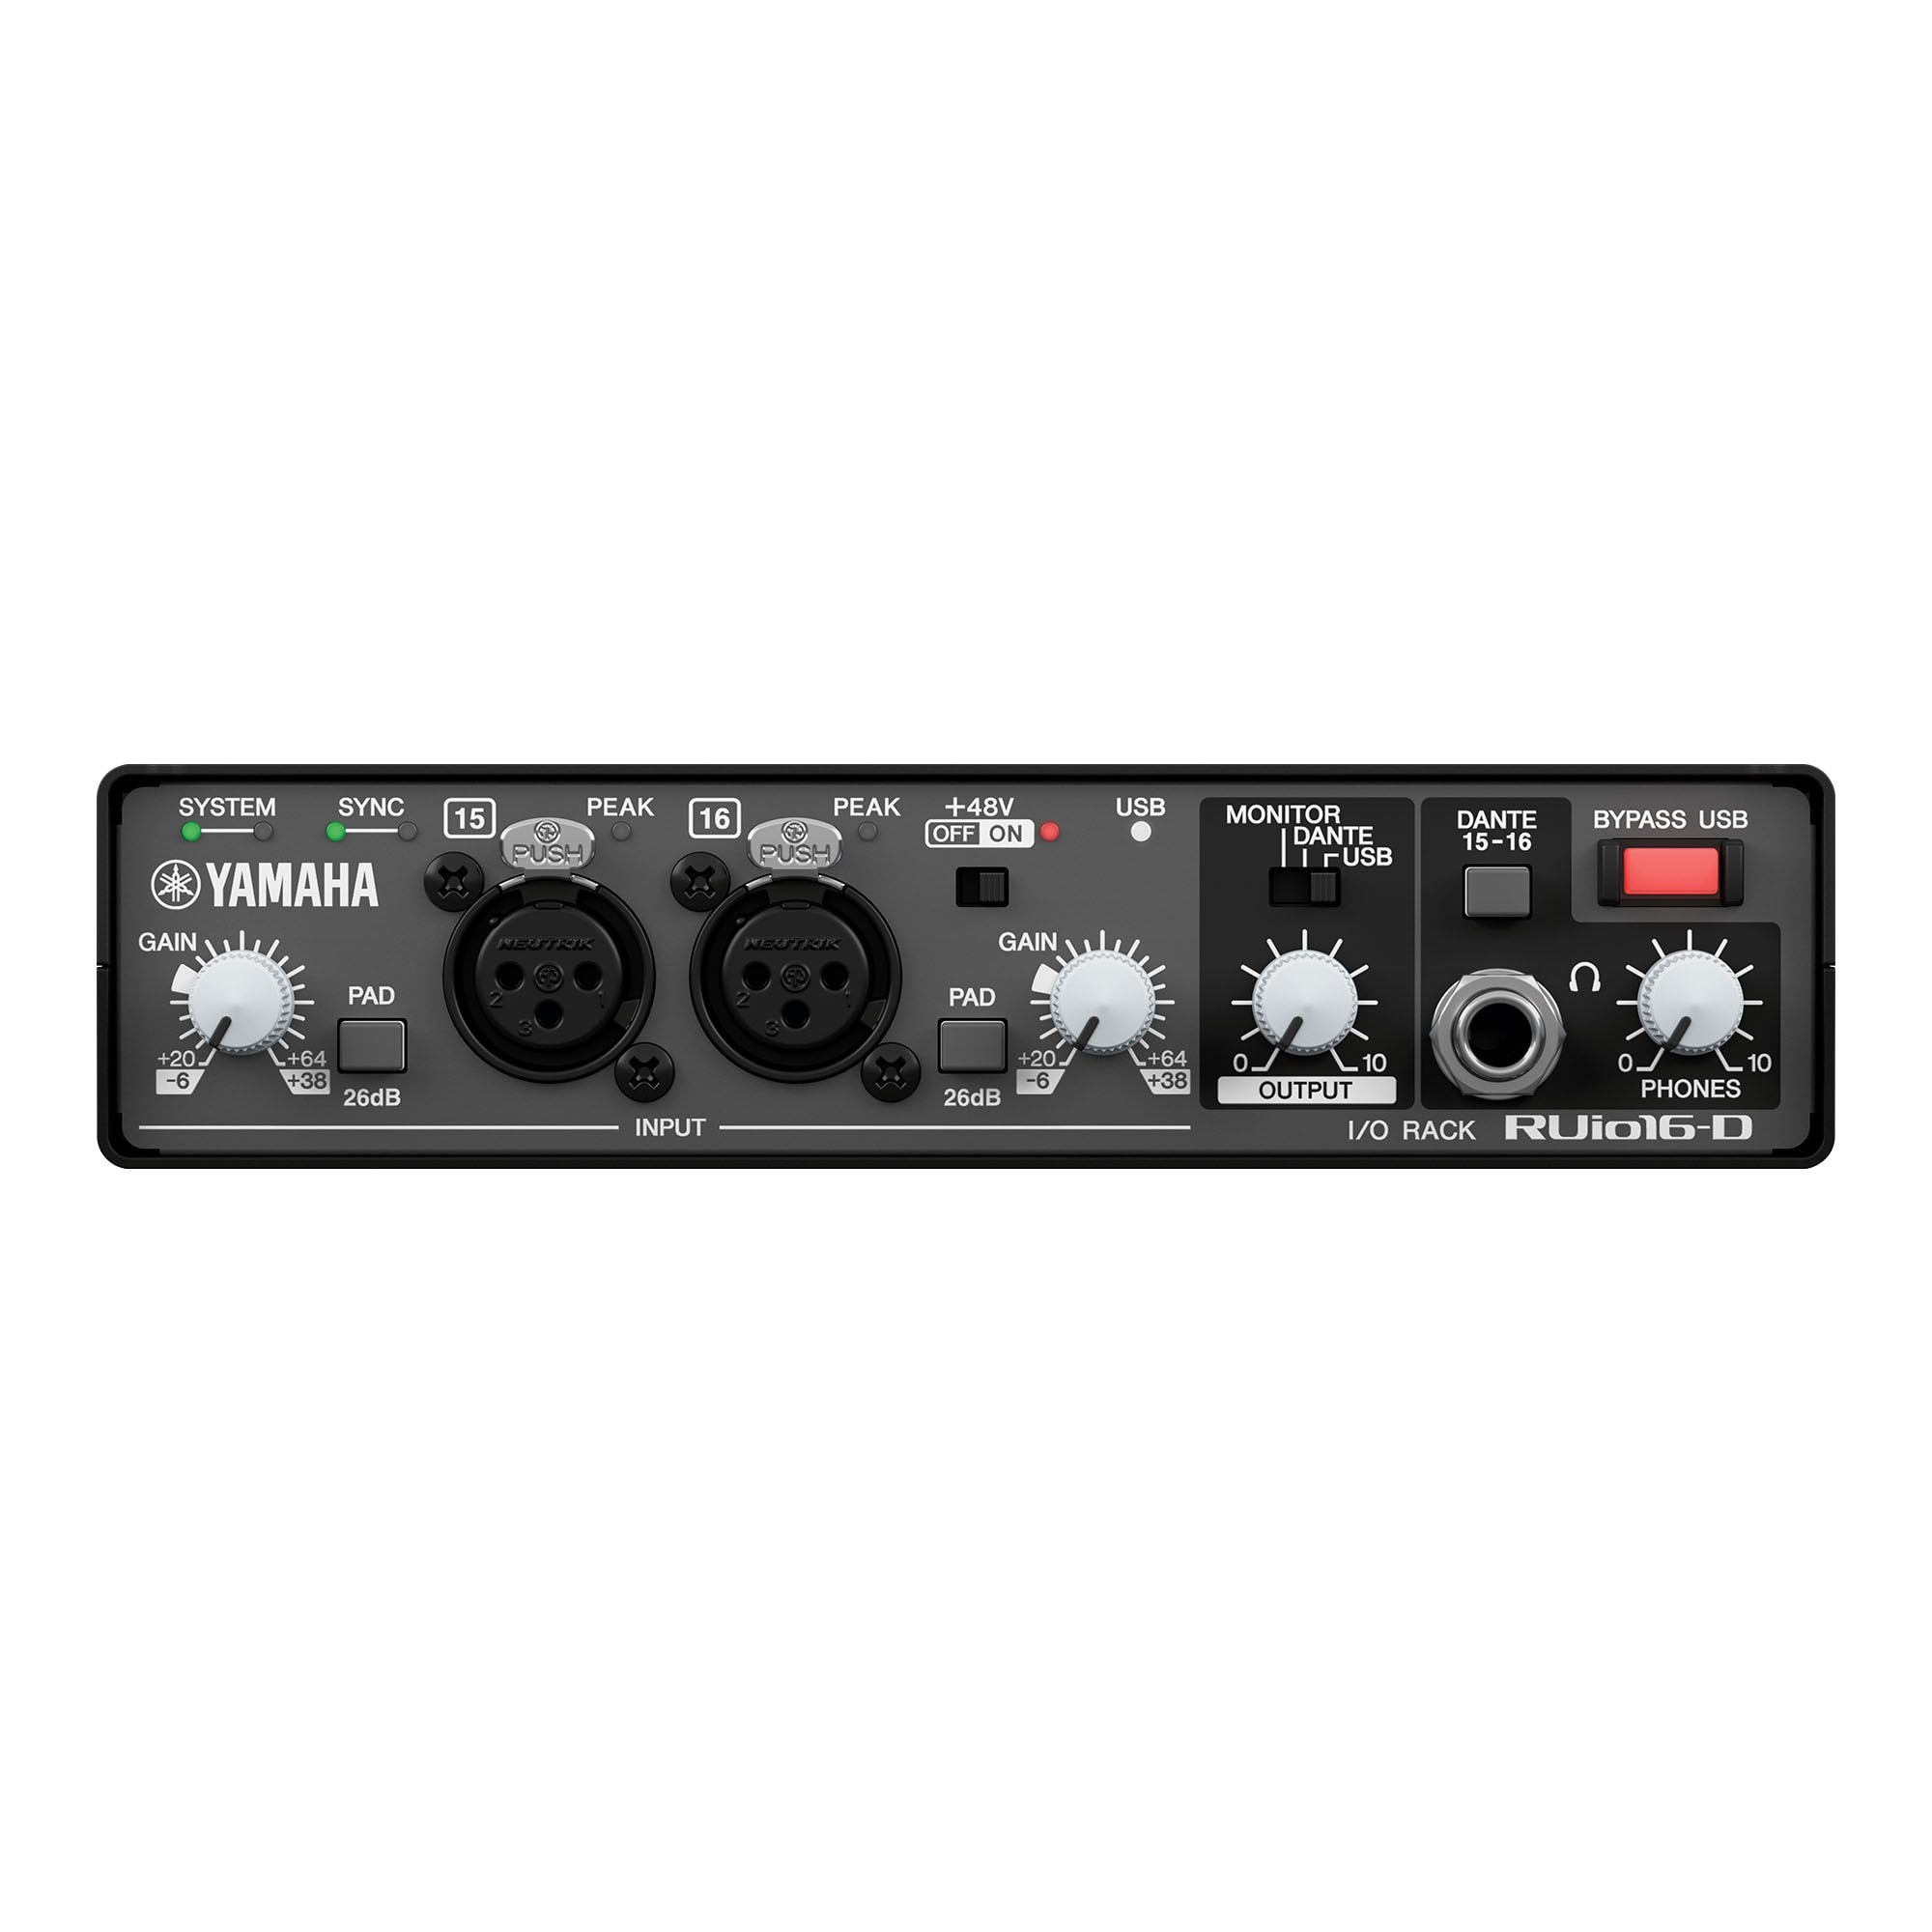 RUio16-D Dante, Analog, USB Audio Interface - Yamaha USA